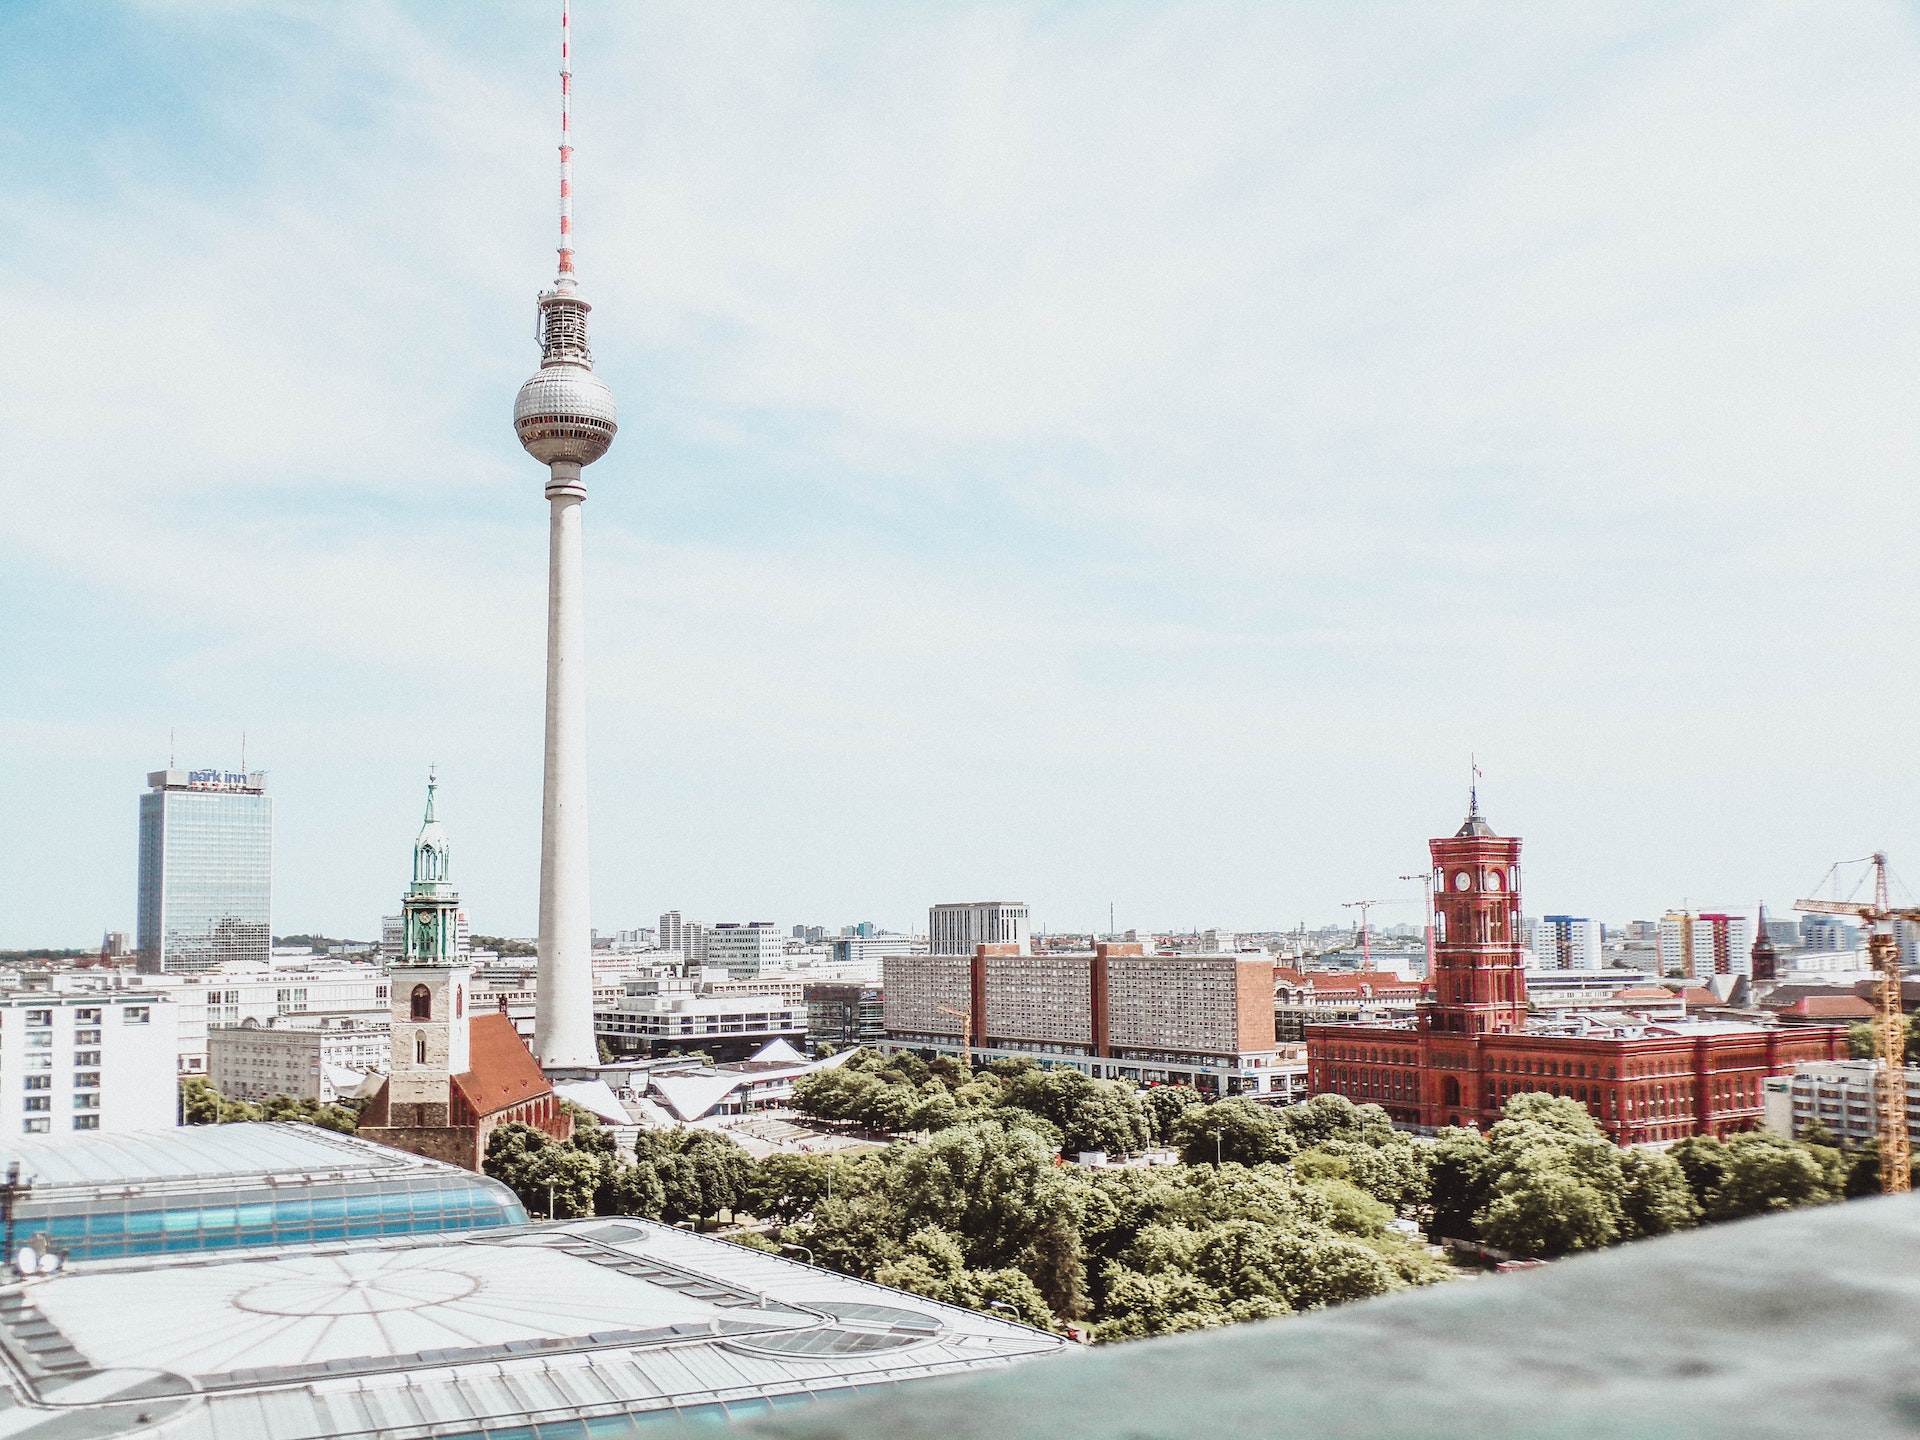 Berlin City Centre Aerial View